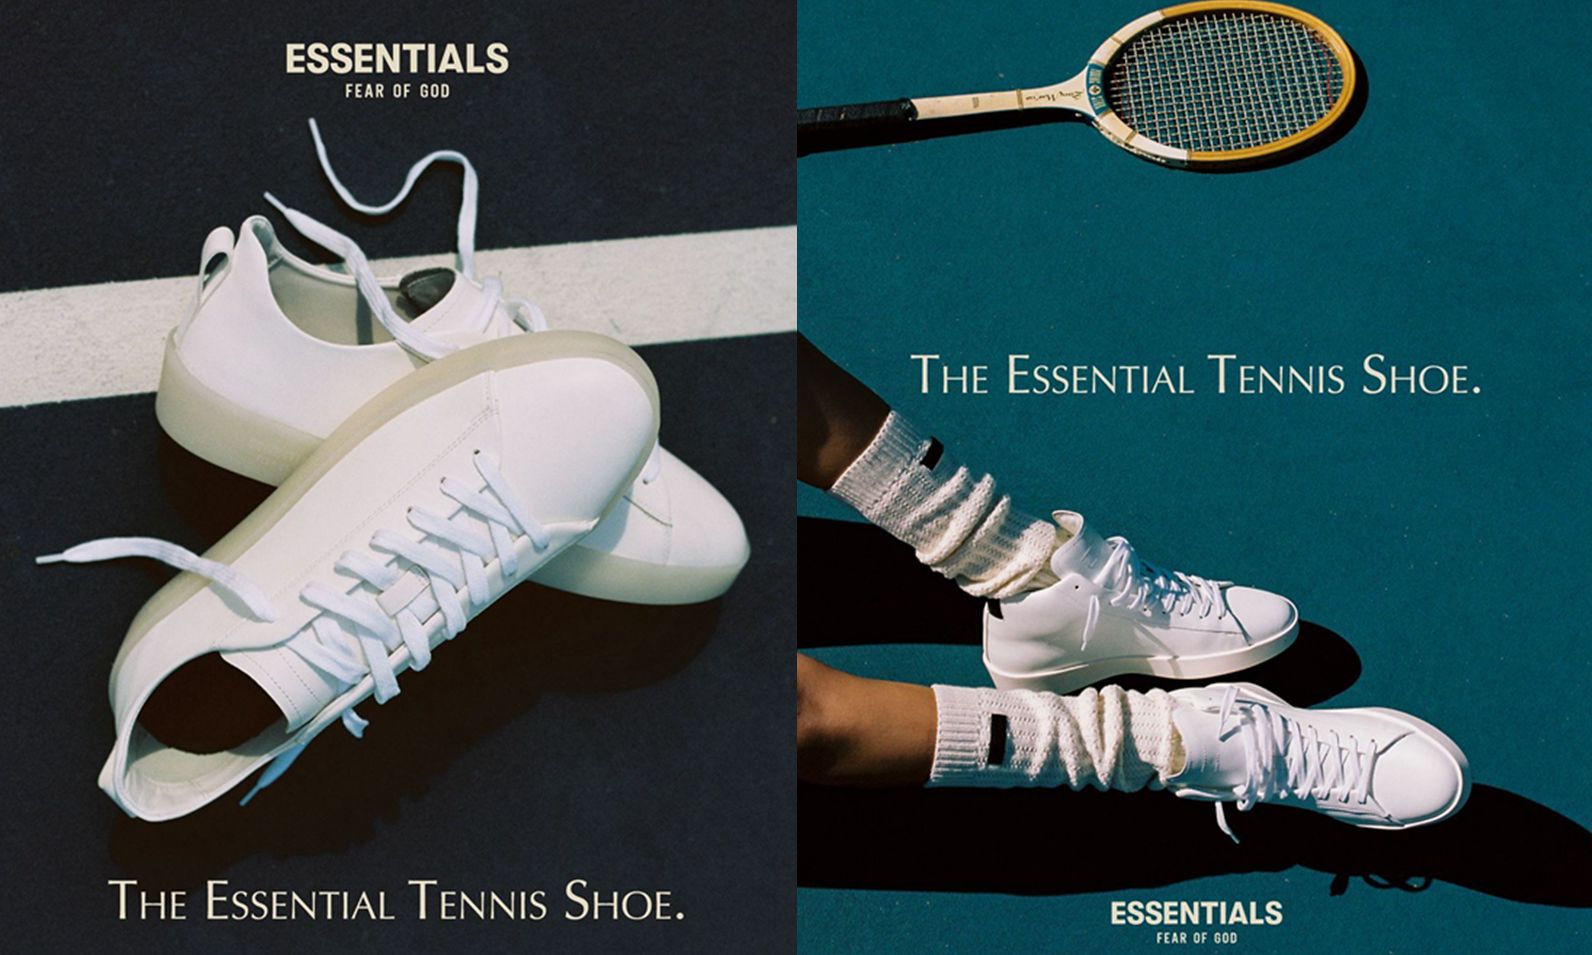 The Essential Tennis Shoe 即将登场